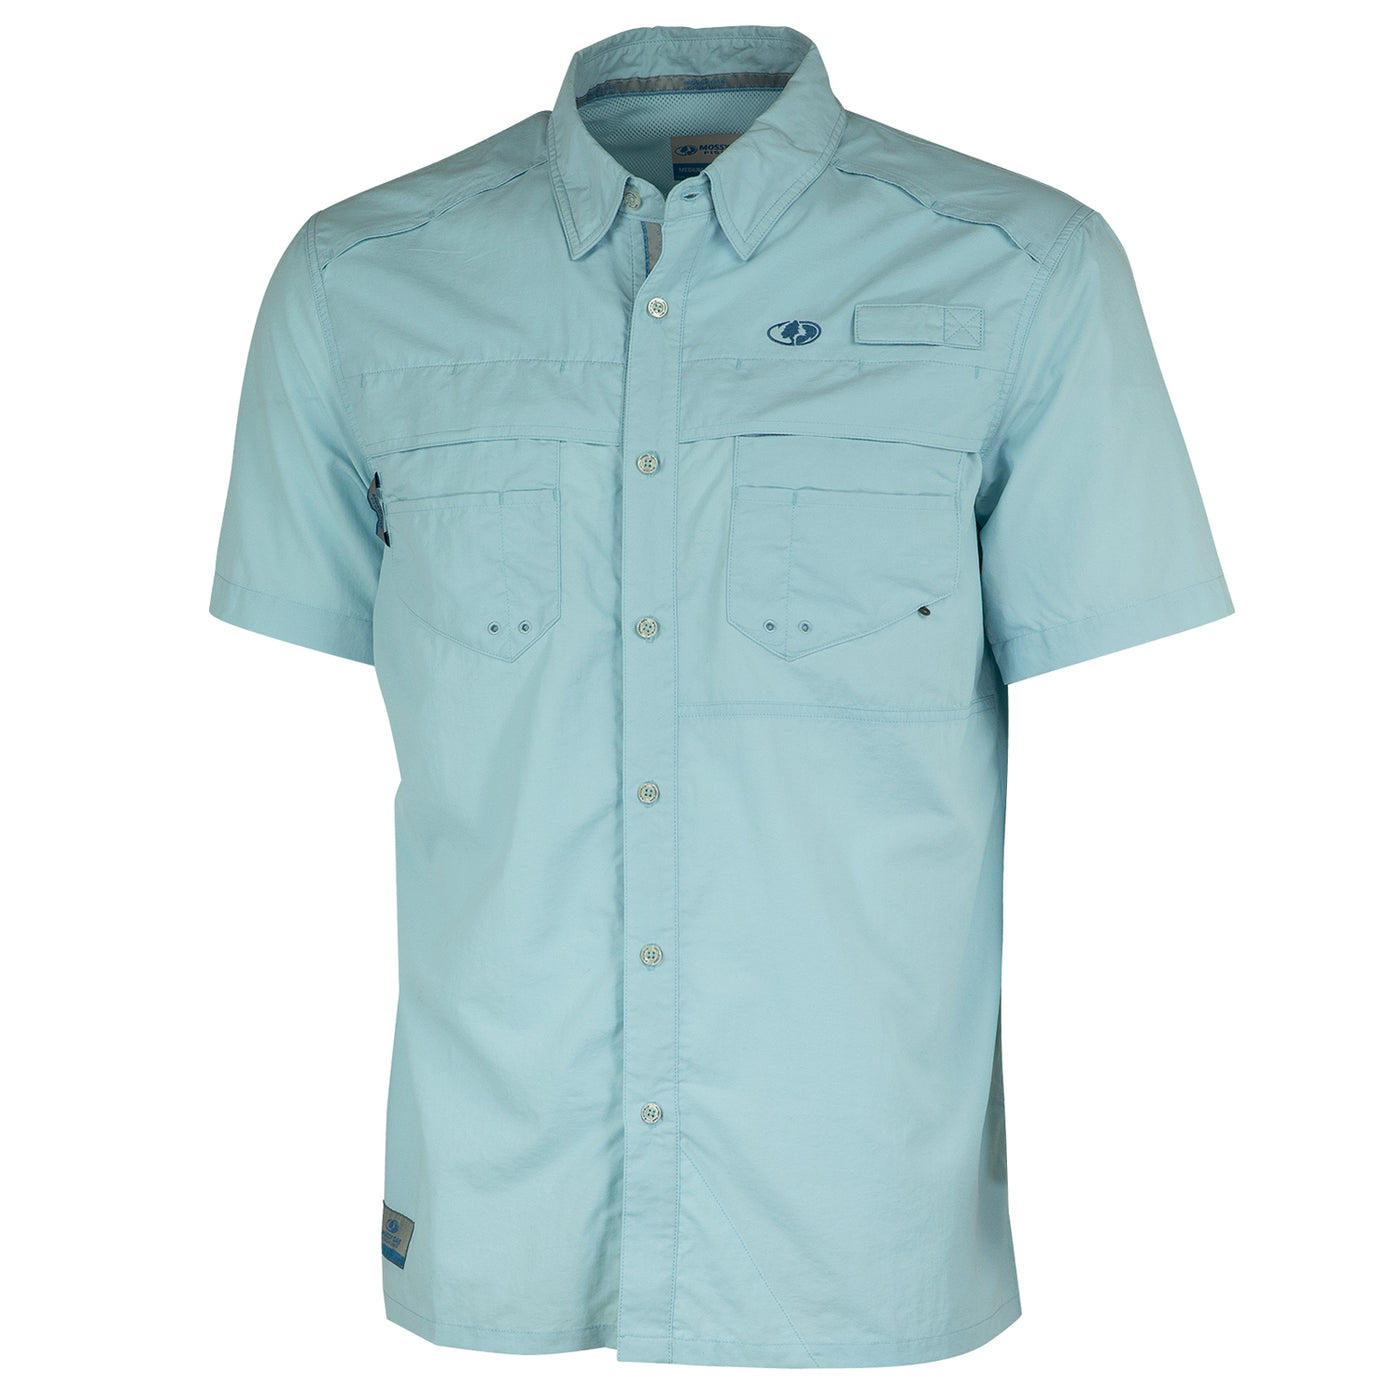 Mossy Oak Men's Short Sleeve Fishing Shirt Cool Blue Front